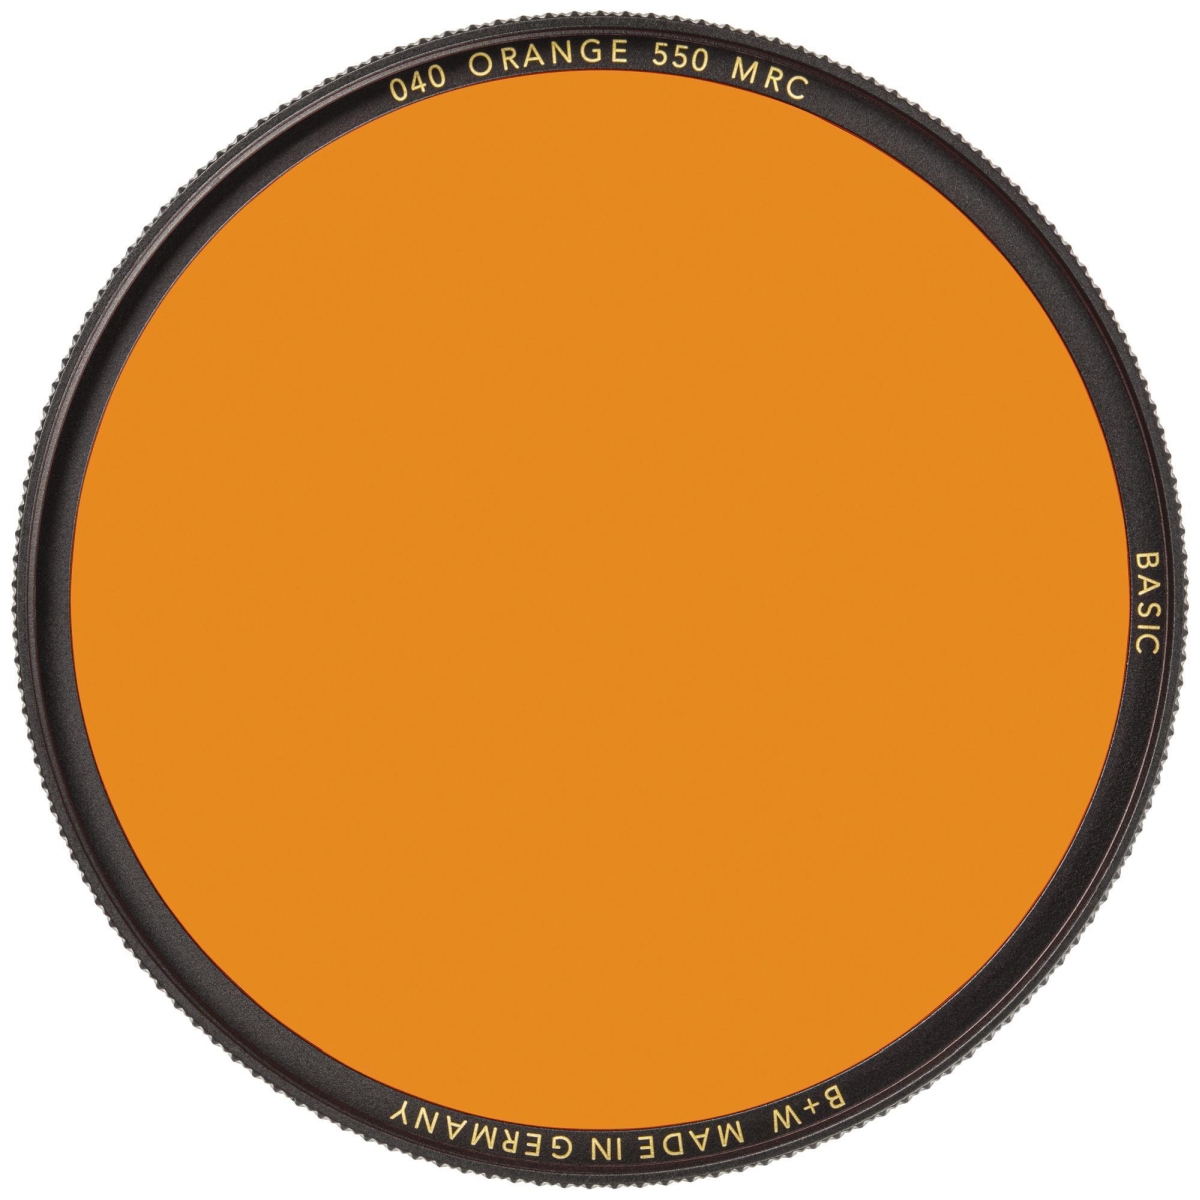 B+W Orange Filter 43 mm 550 MRC Basic